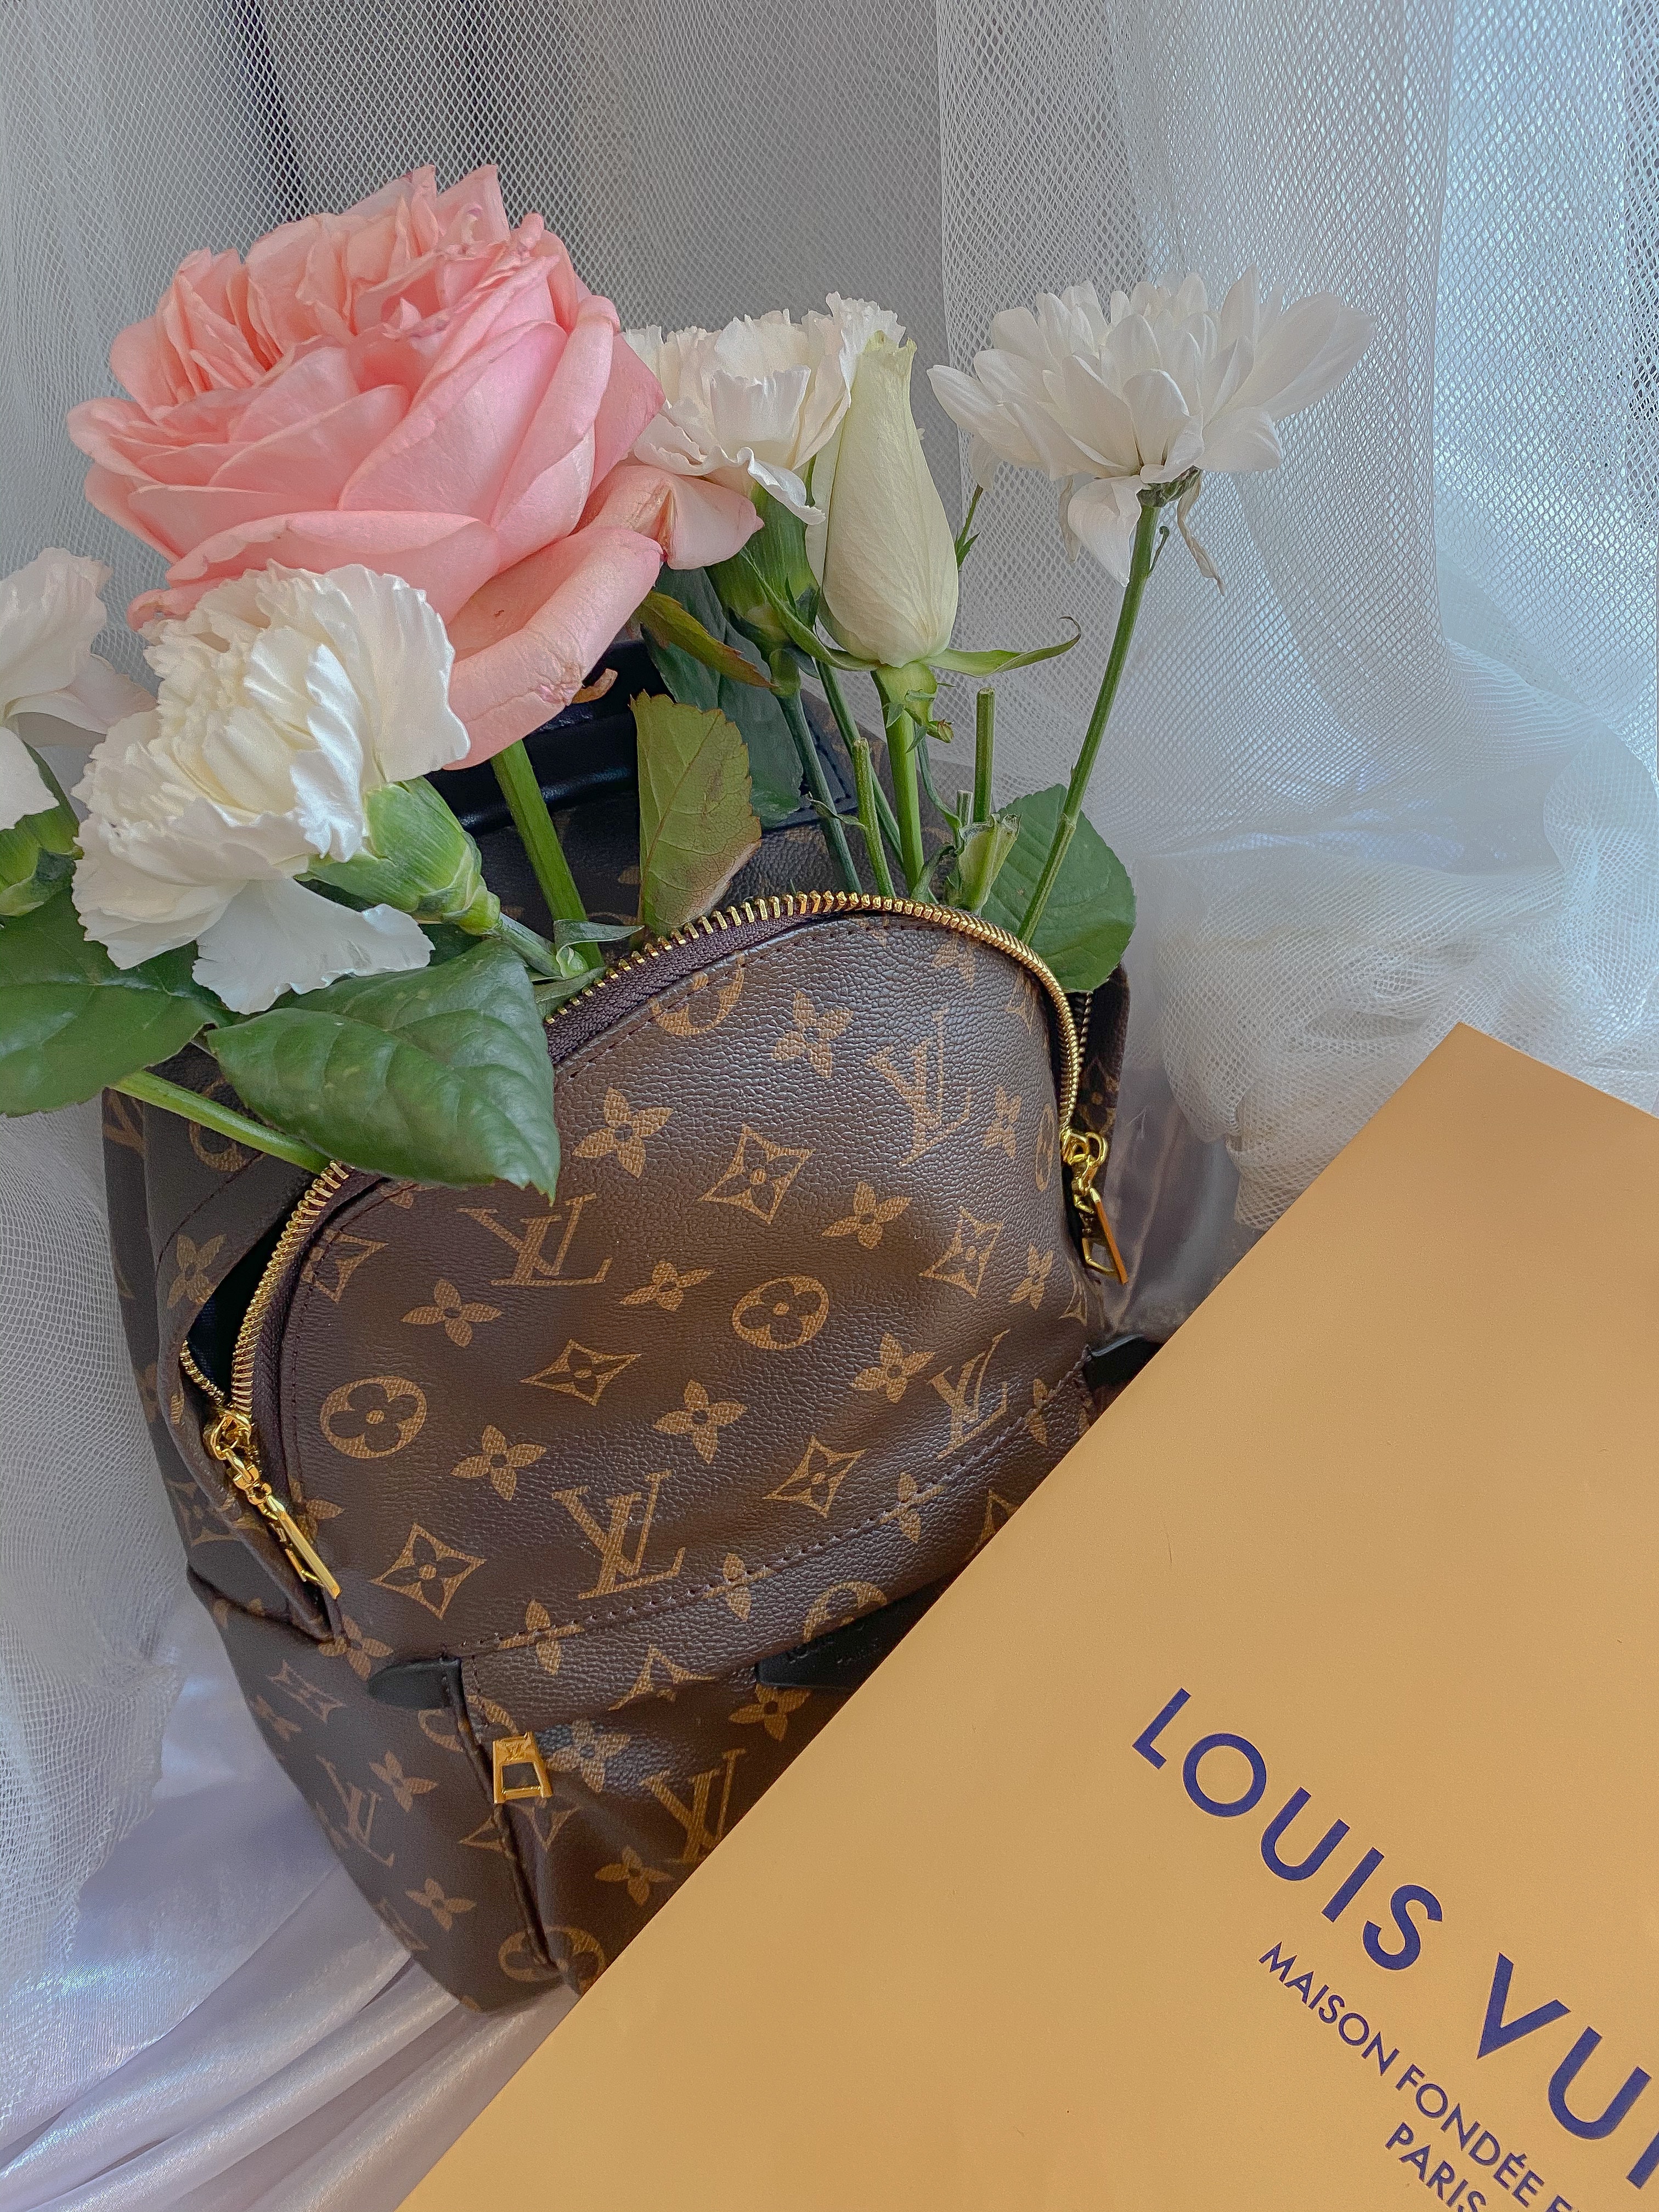 Best Free Louis Vuitton & Image · 100% Royalty Free HD Downloads